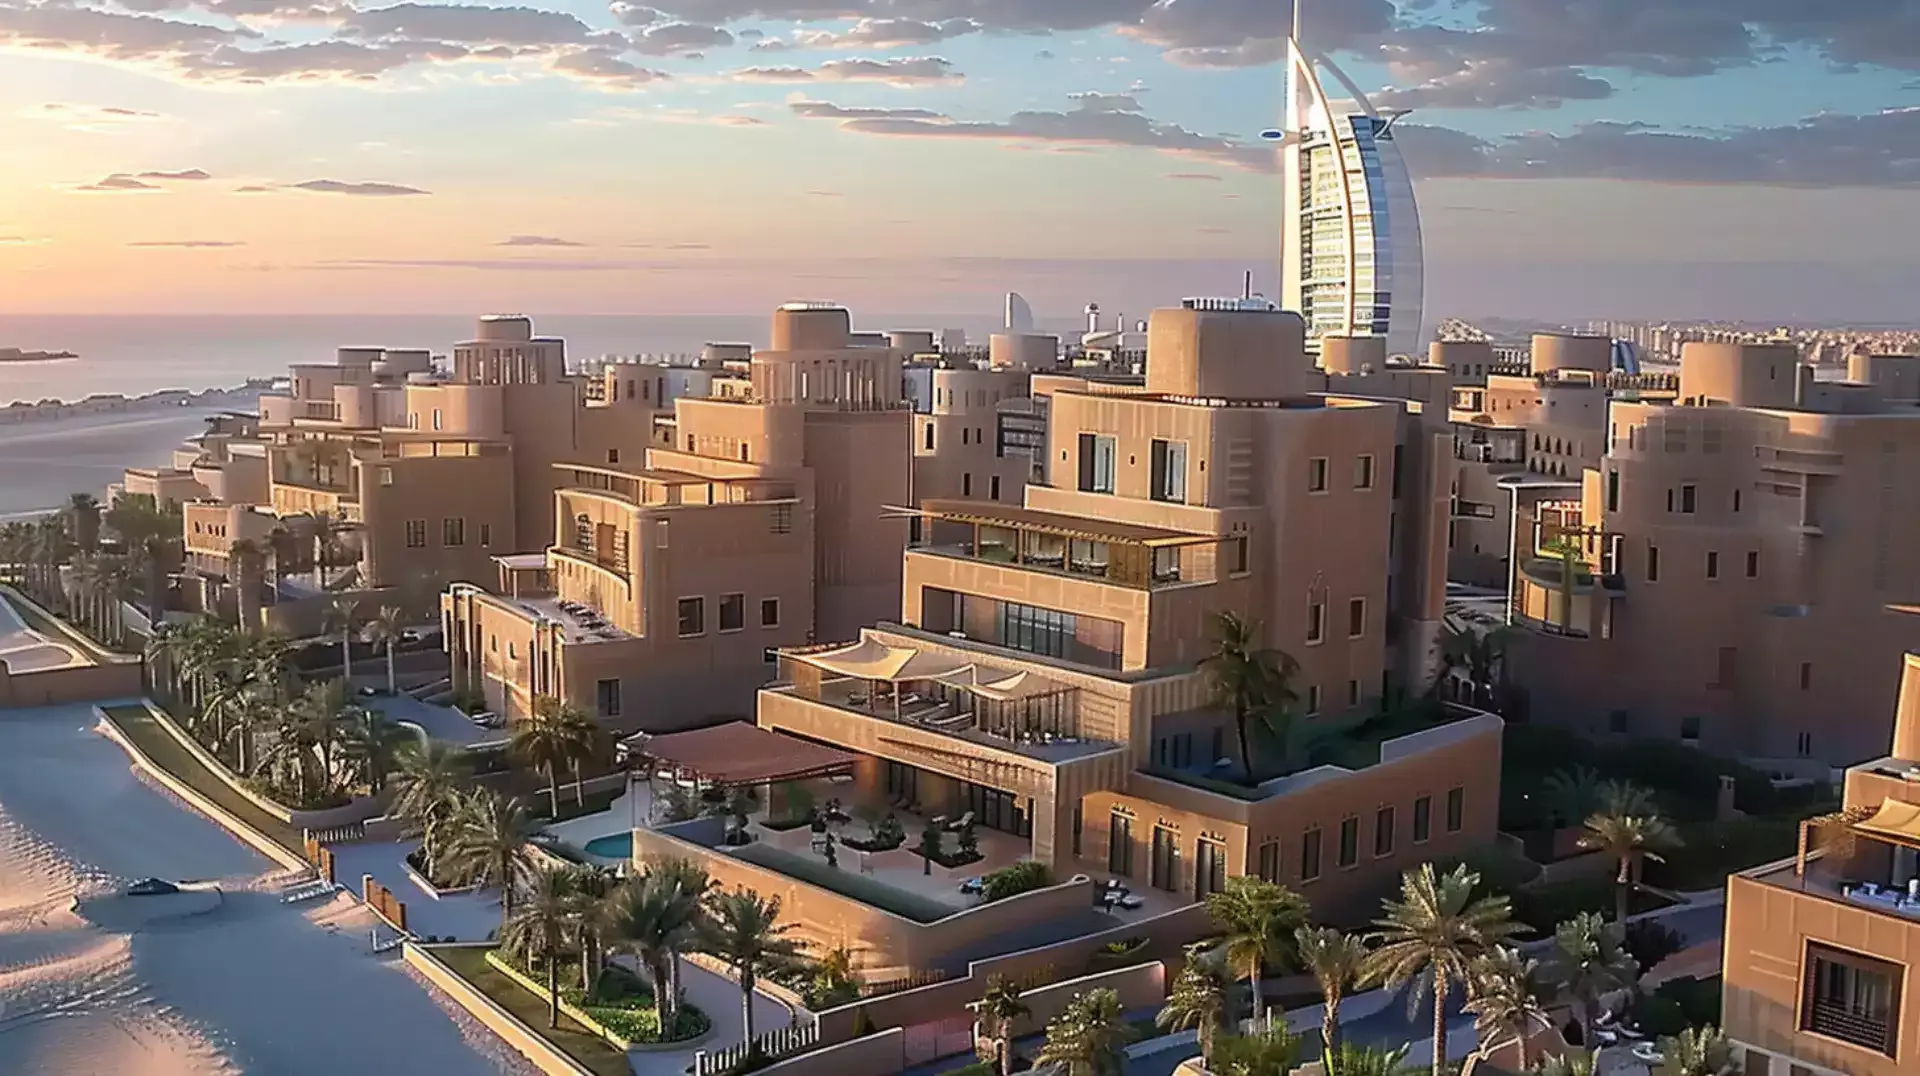 Image featuring the luxurious Al Furjan's Villa Communities in Dubai